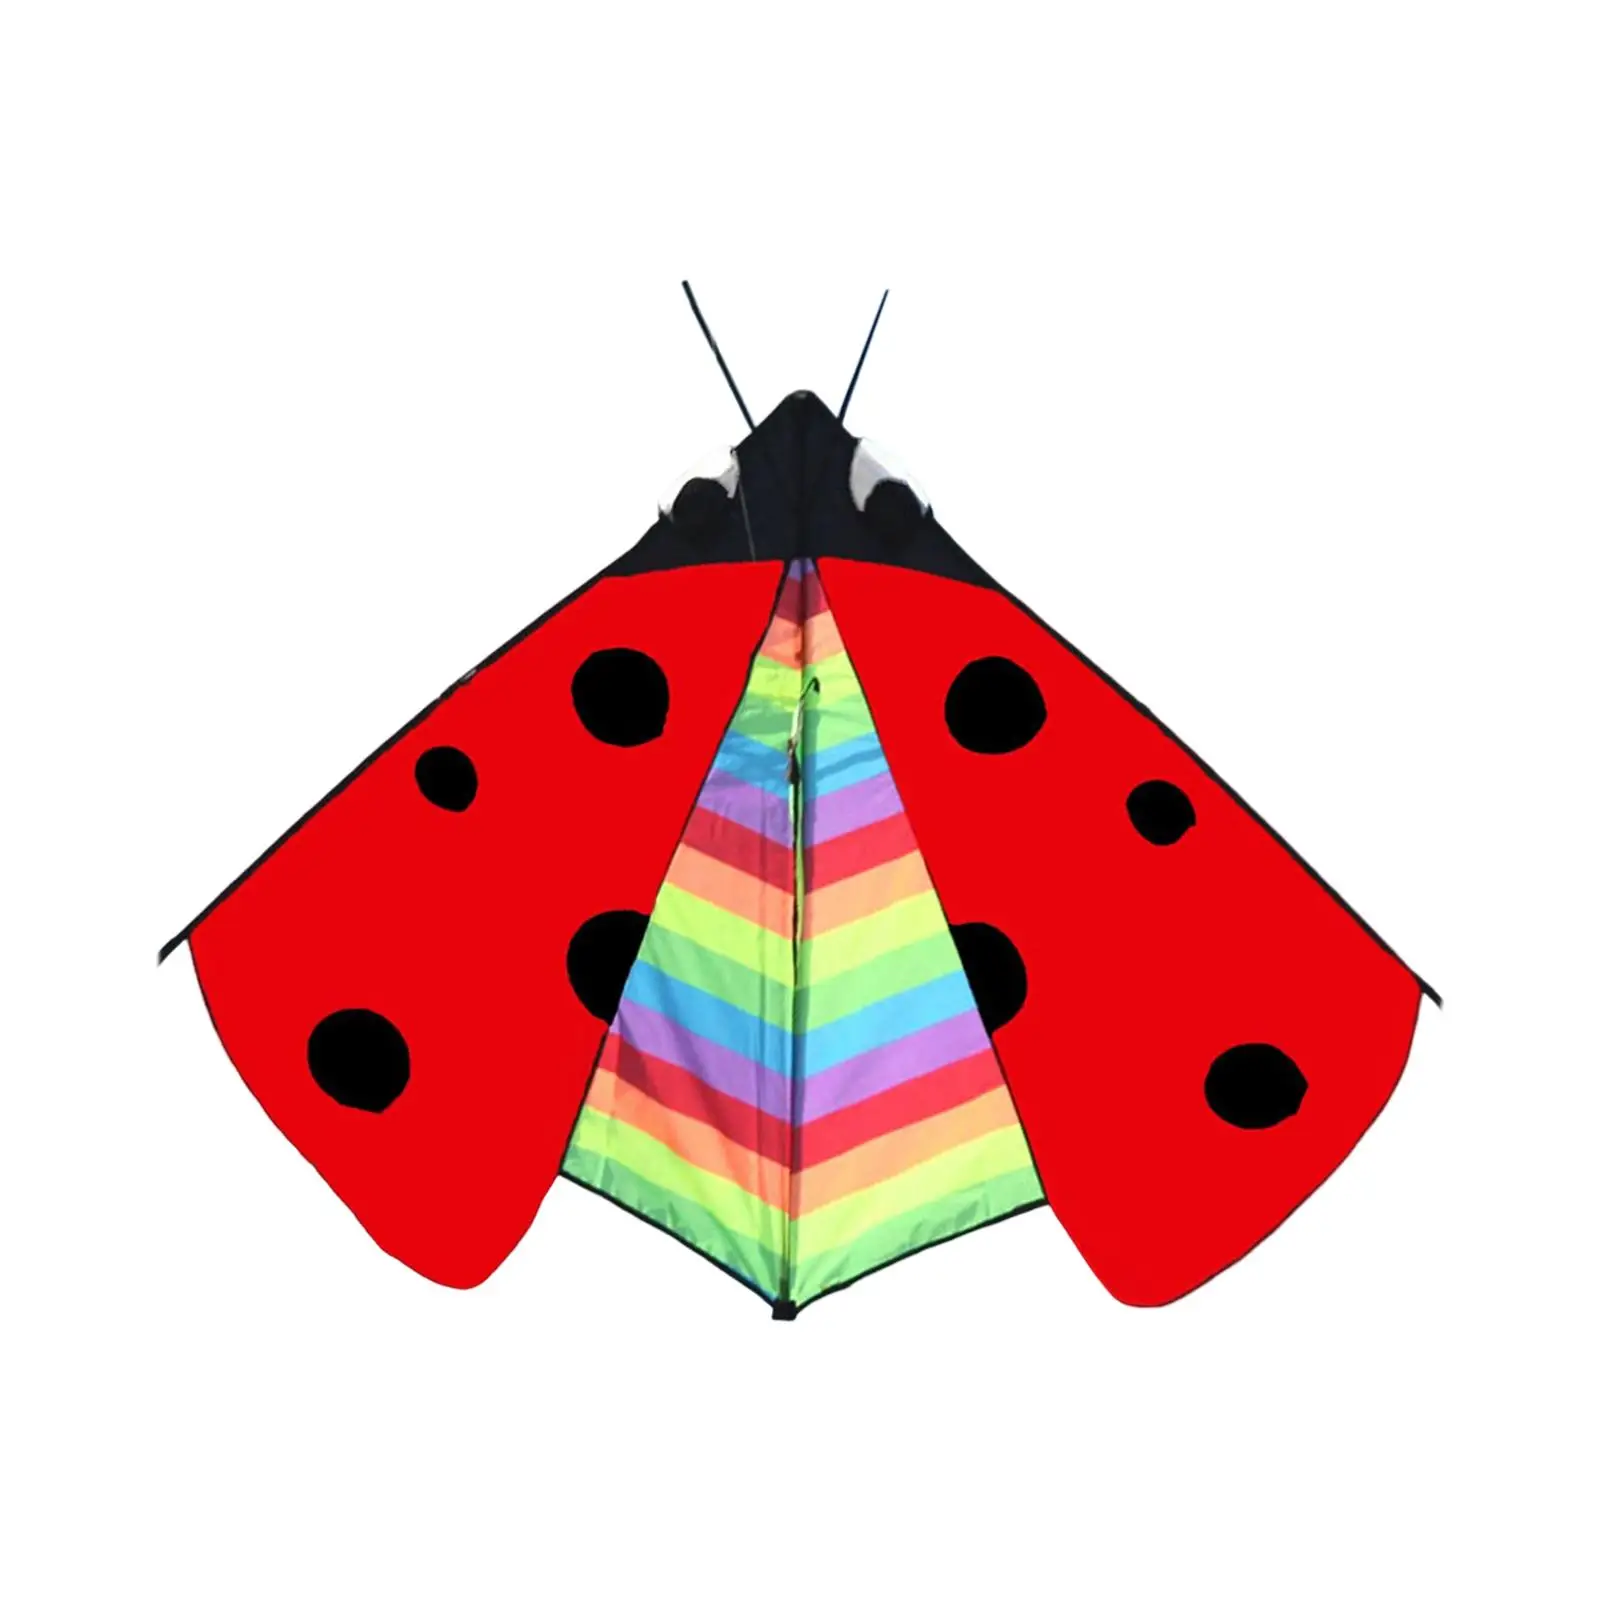 Large Delta  Kite  Flyer Flying Toys Huge  Windsock Colorful Triangle Ladybug Kite  Beach Holiday Garden Sports